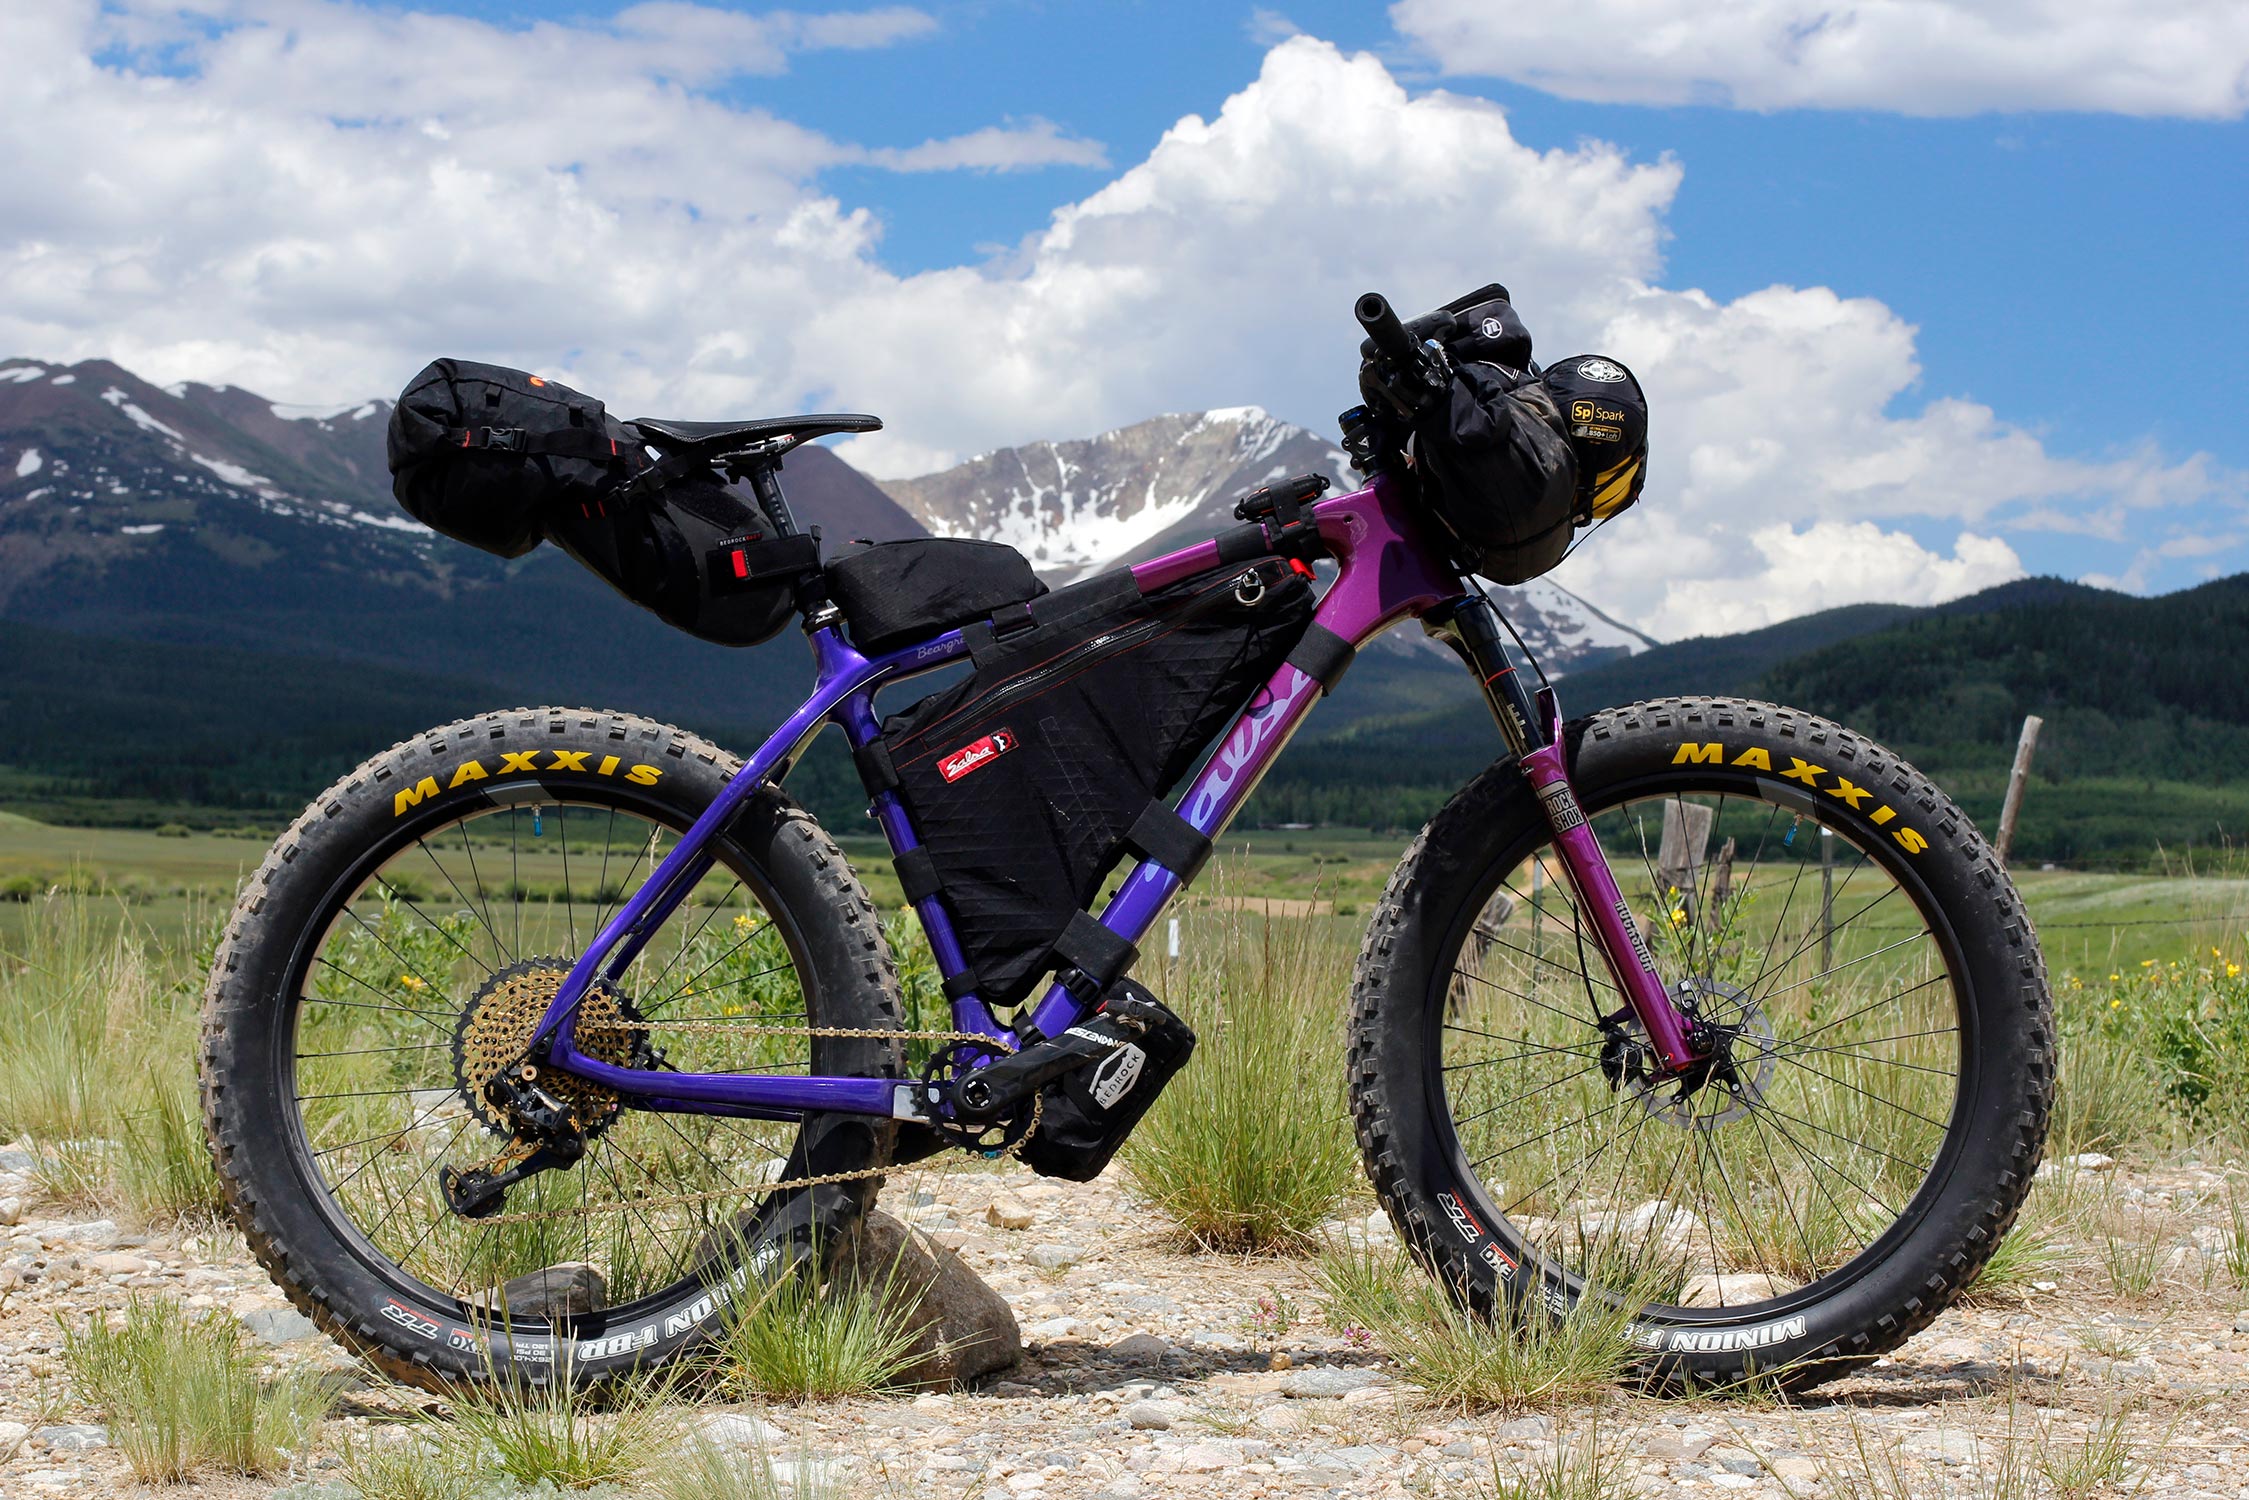 colorado trail bikepacking